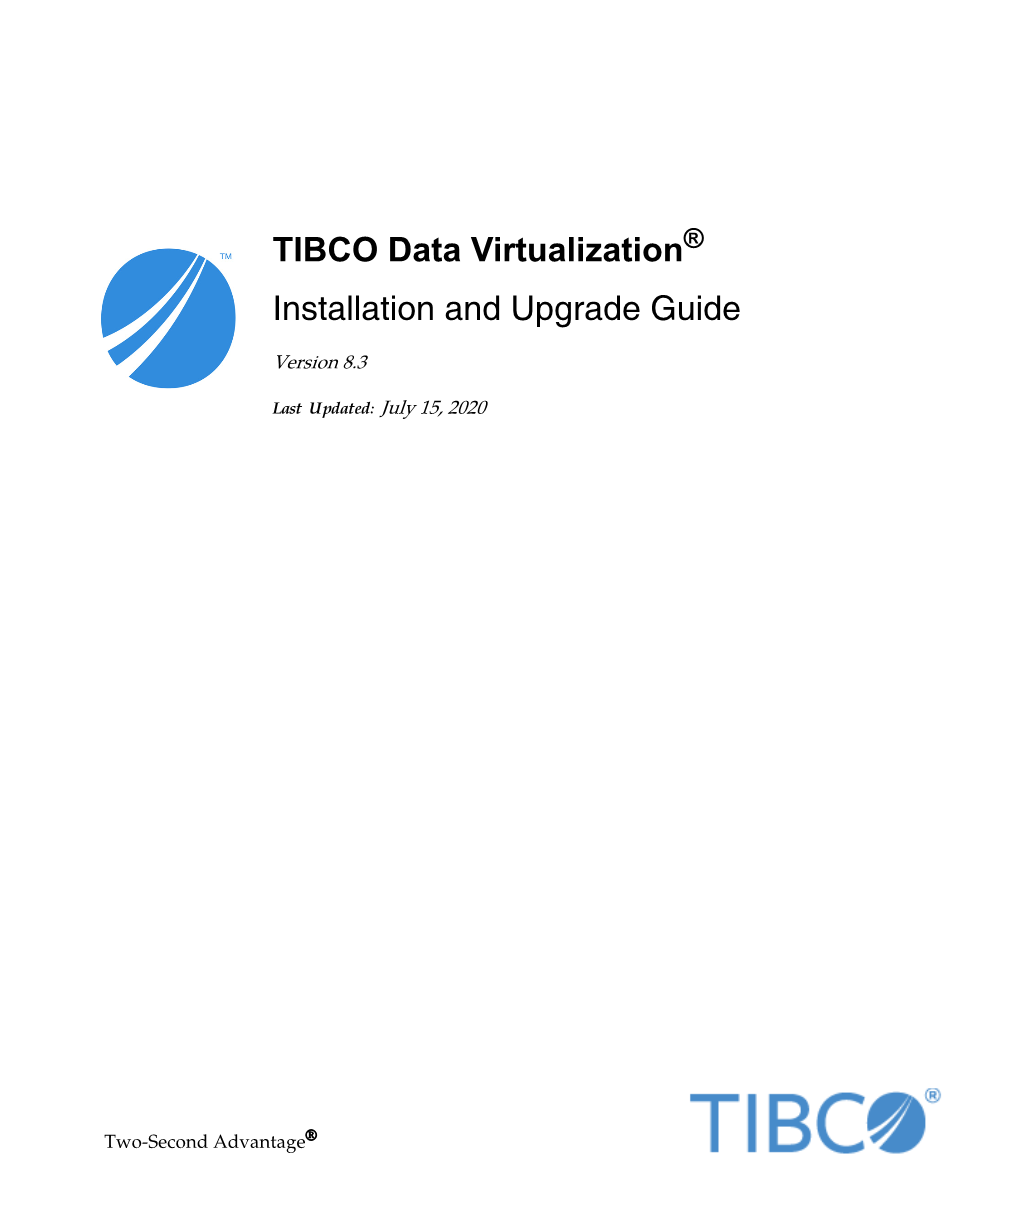 TIBCO Data Virtualization Installation and Upgrade Guide